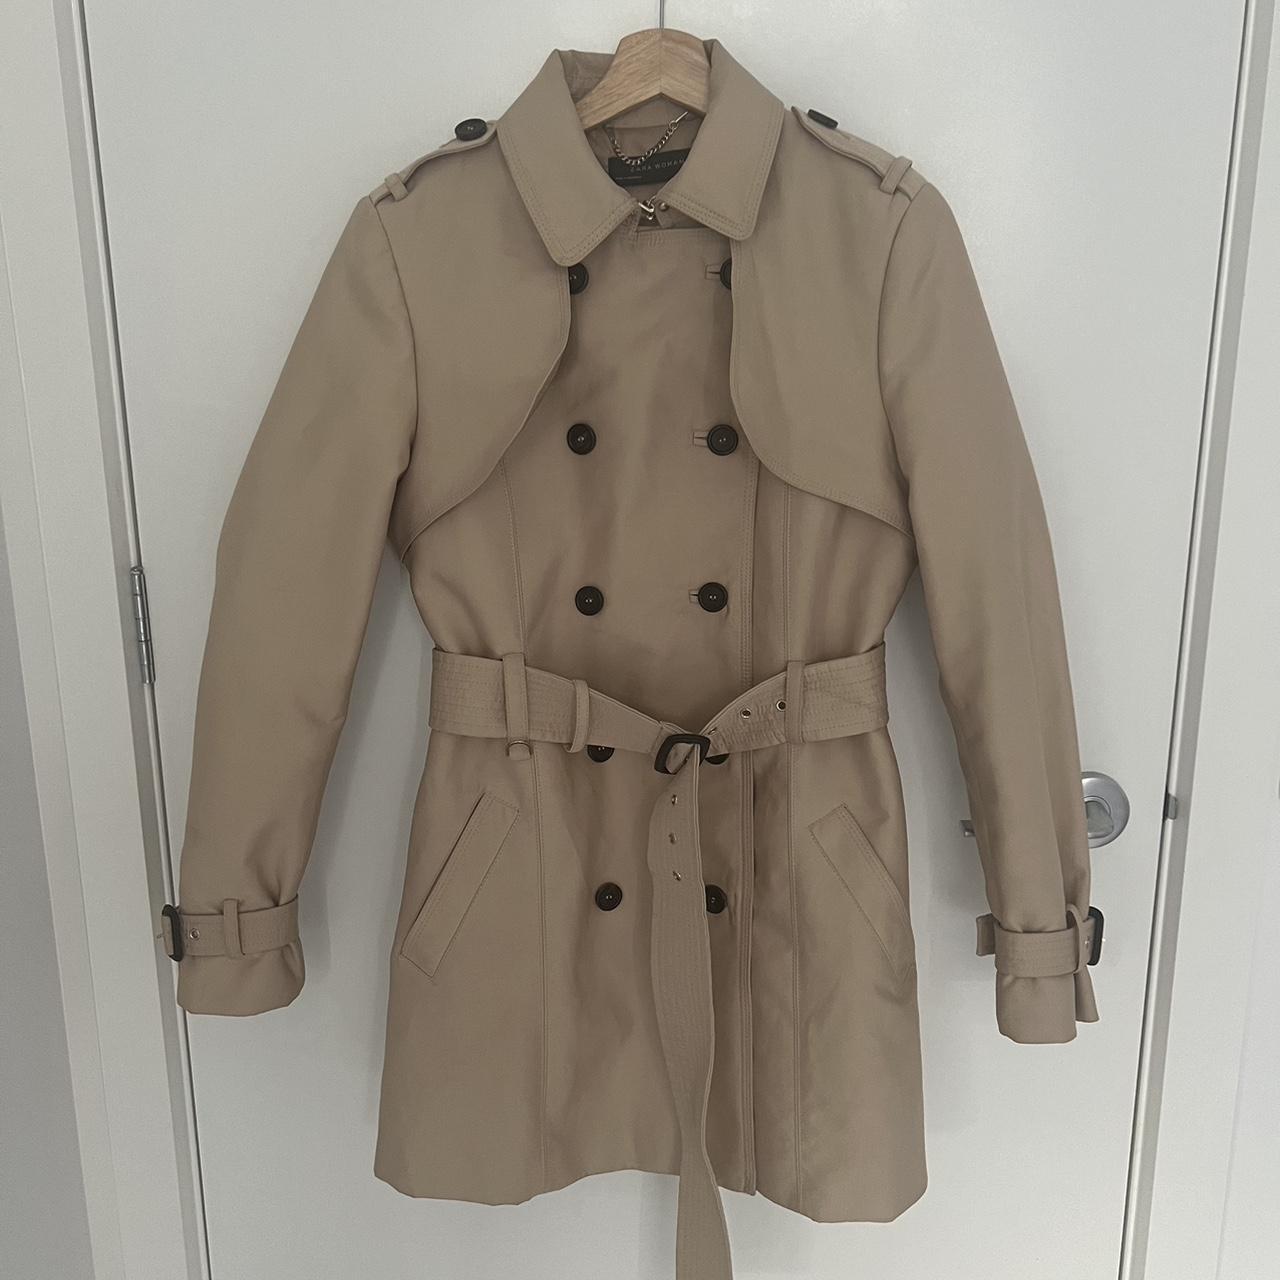 Zara trench coat (short) #trench #zara #transeasonal - Depop